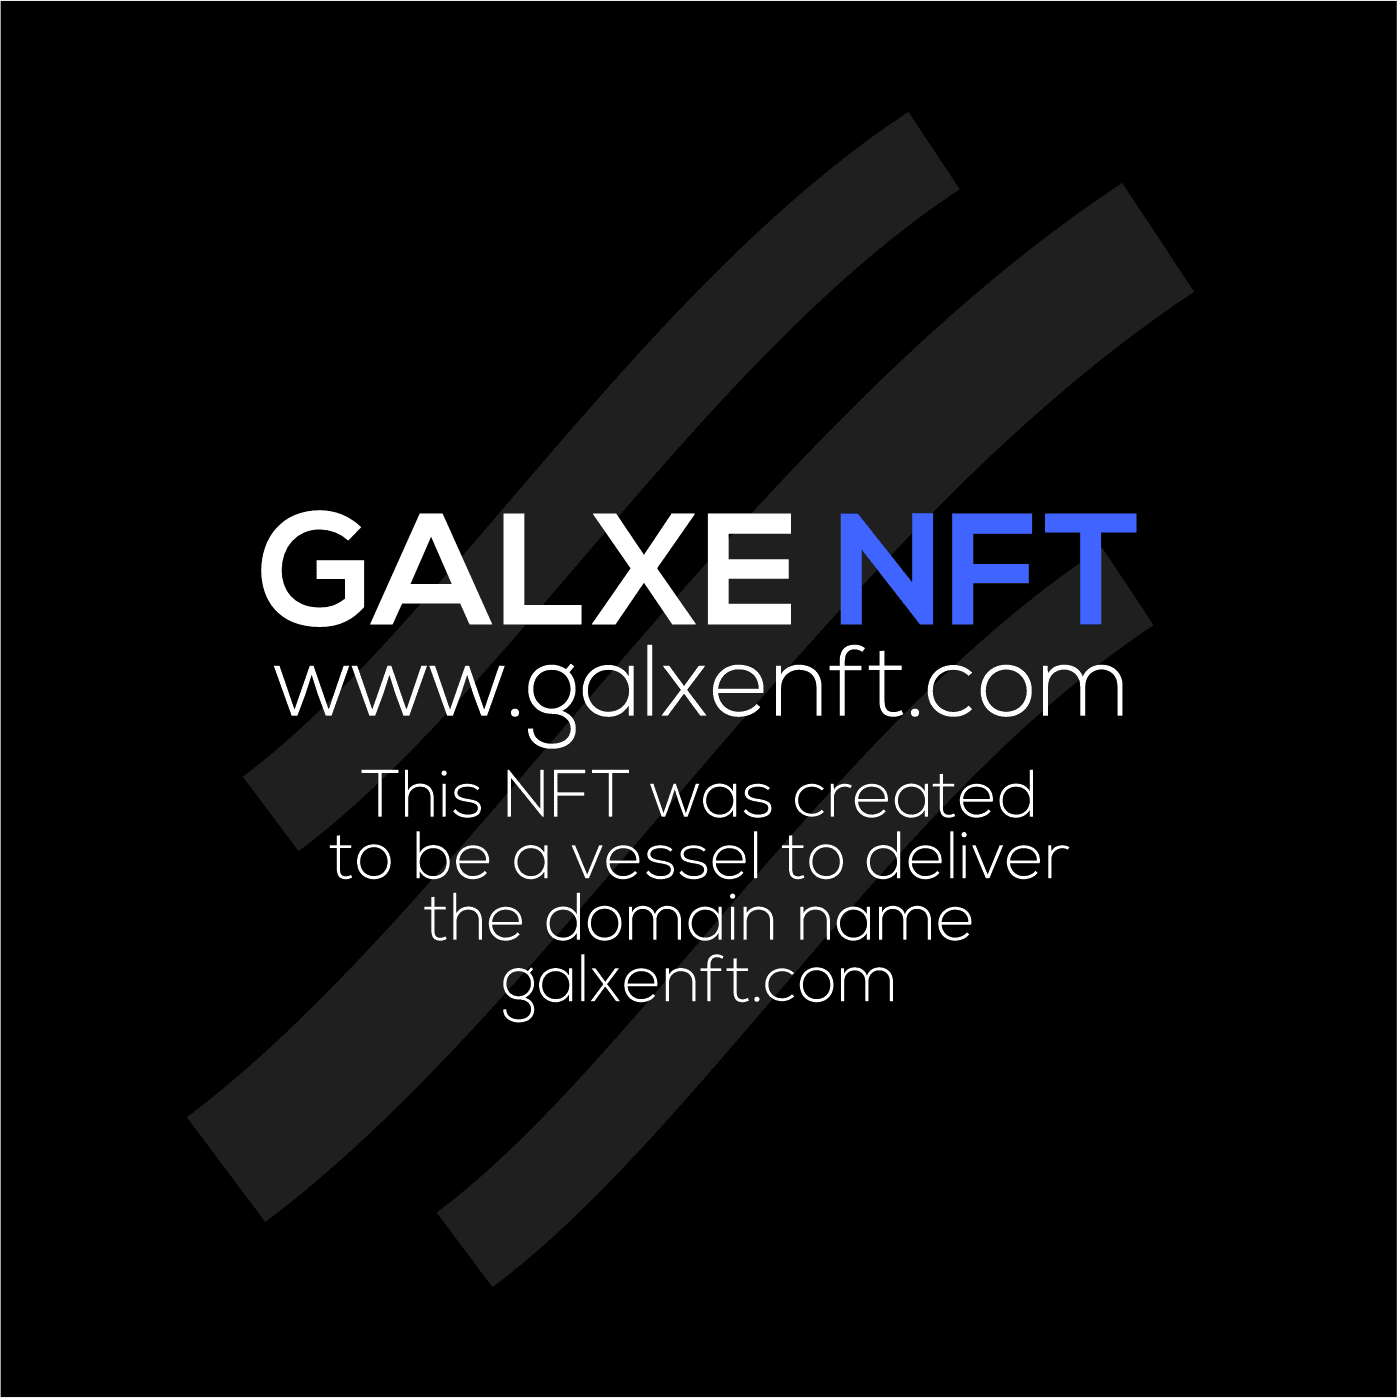 GALXE NFT COM DOMAIN NAME